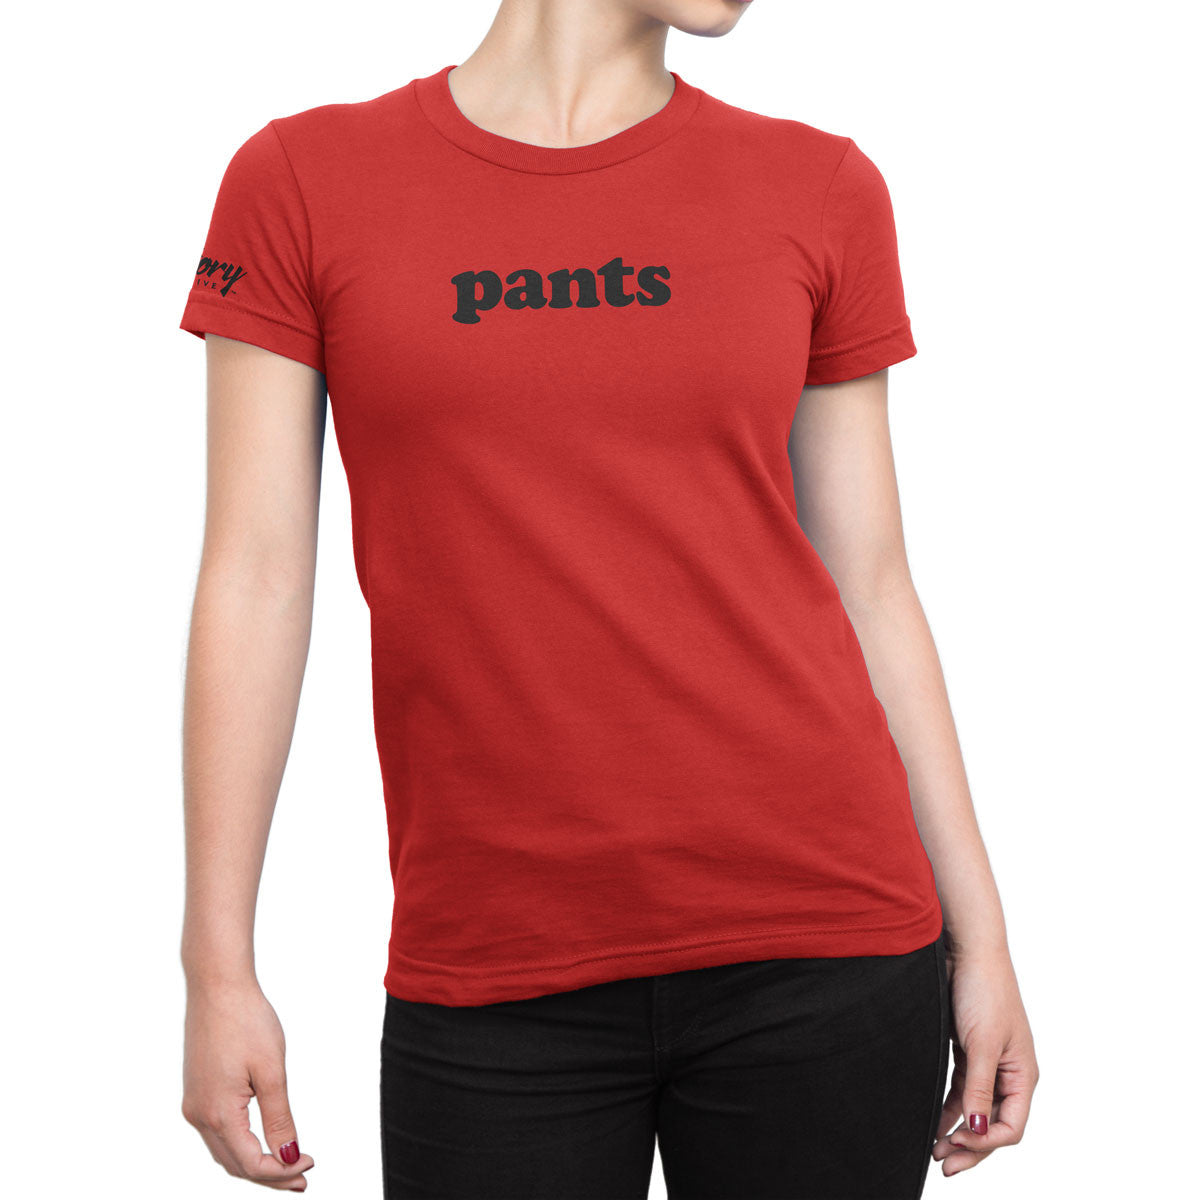 Pants — Women's T-Shirt (Red)